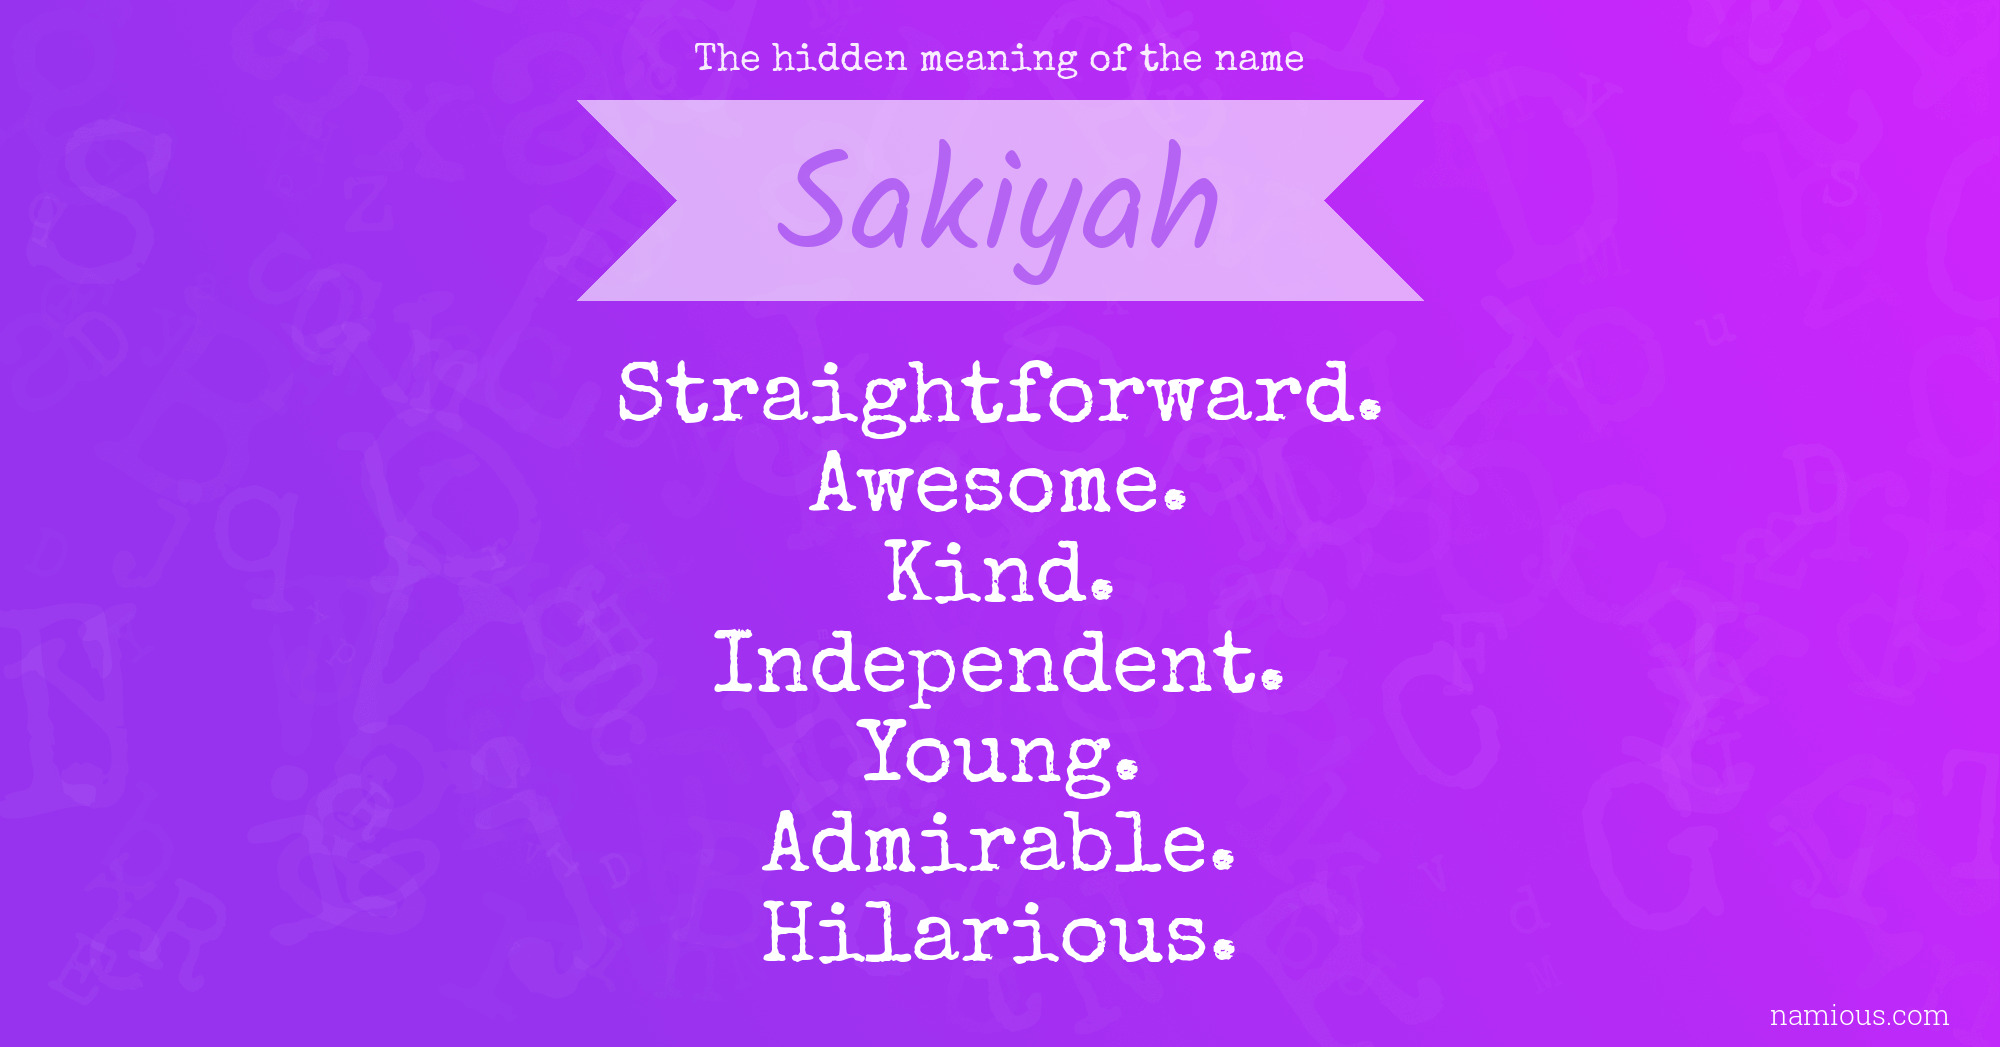 The hidden meaning of the name Sakiyah